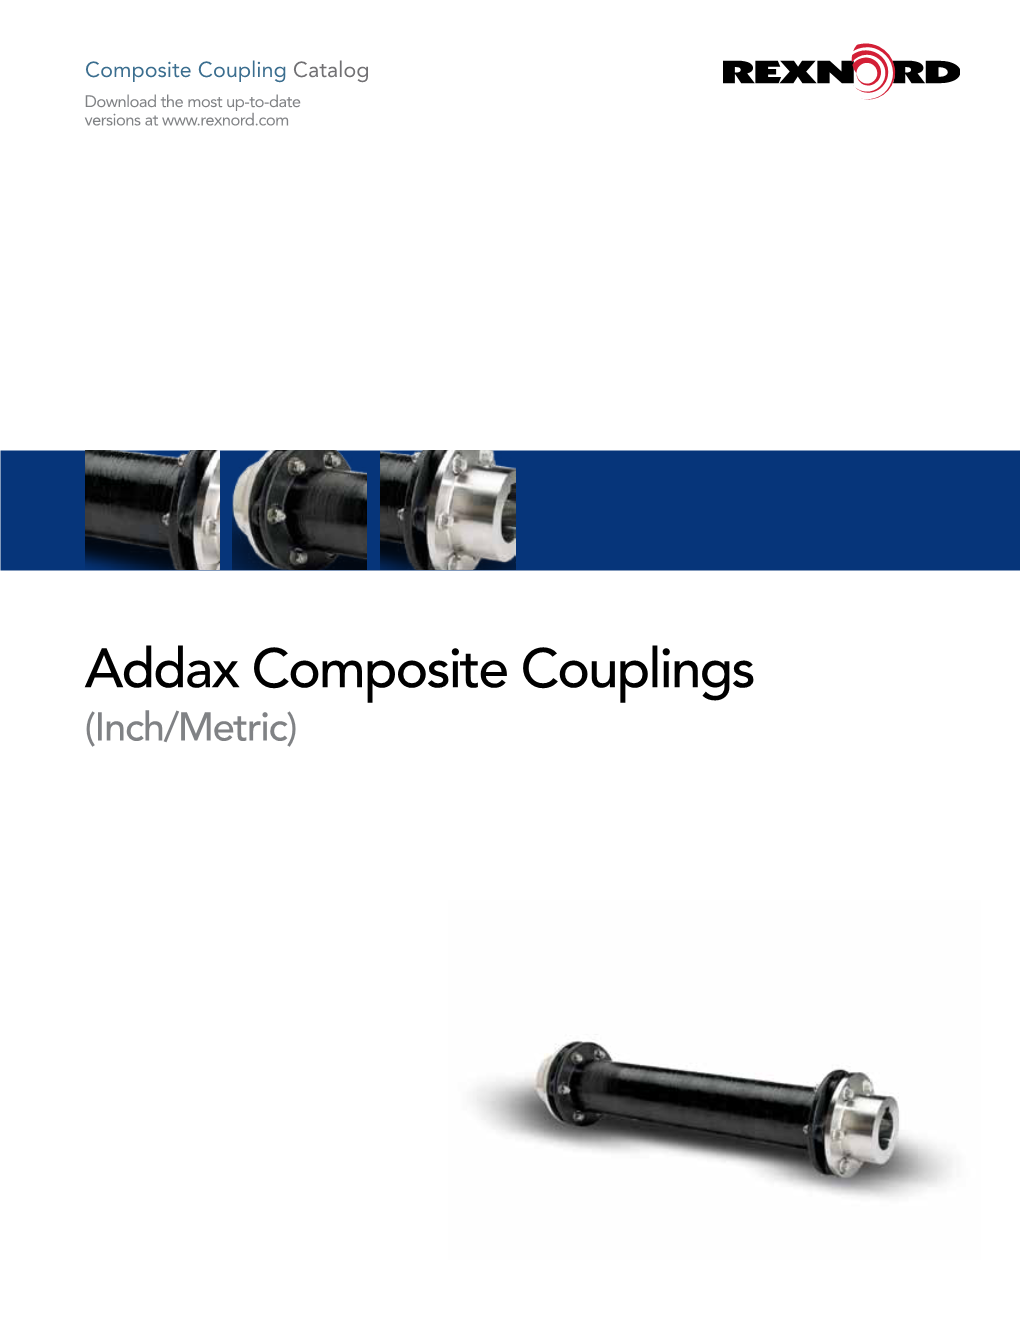 Addax Composite Couplings Catalog